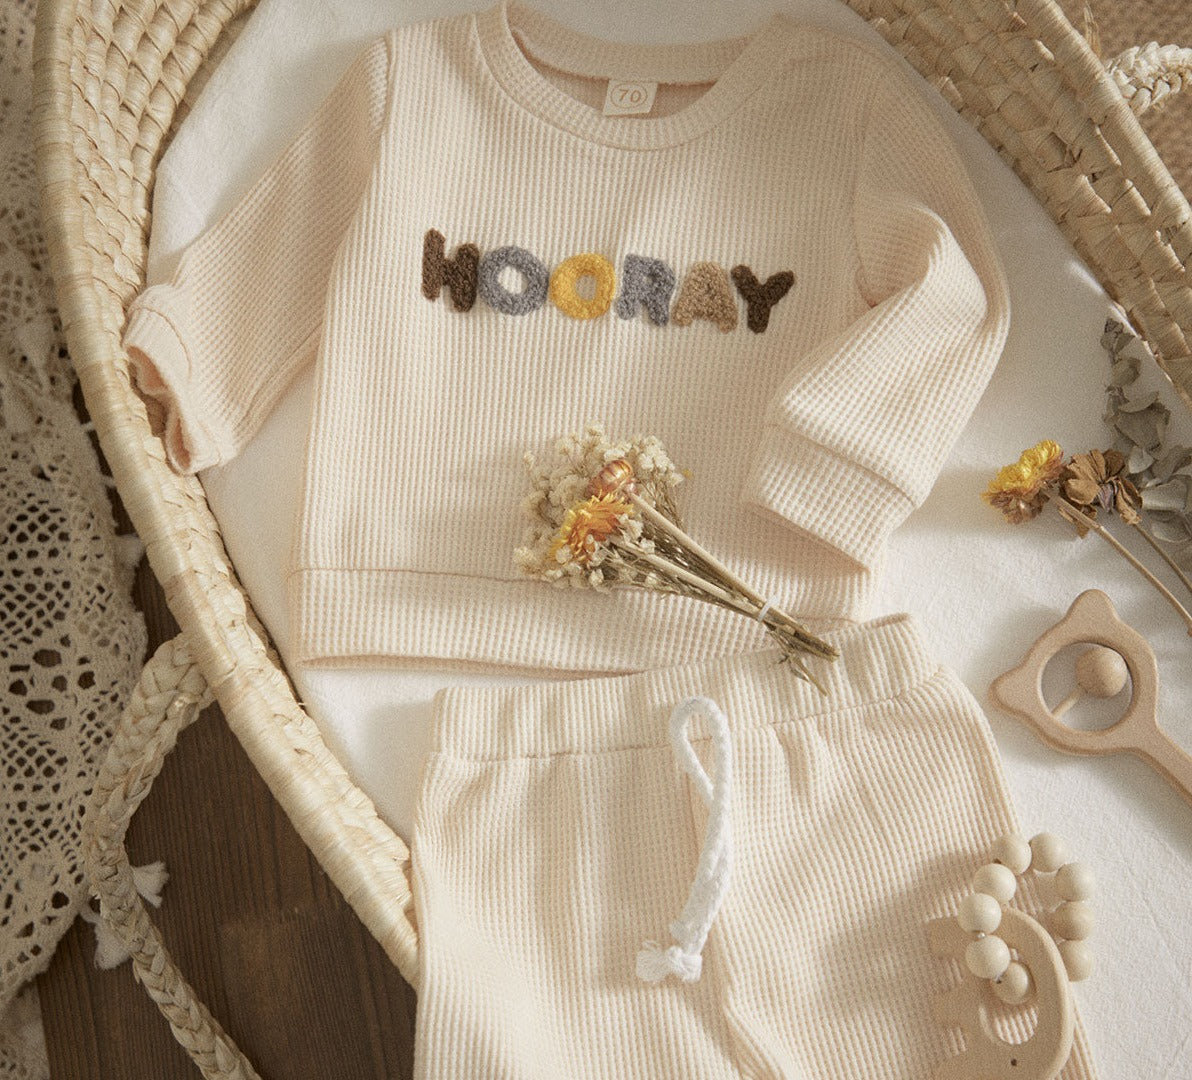 Newborn Infant Baby Boy Girl Clothes Set